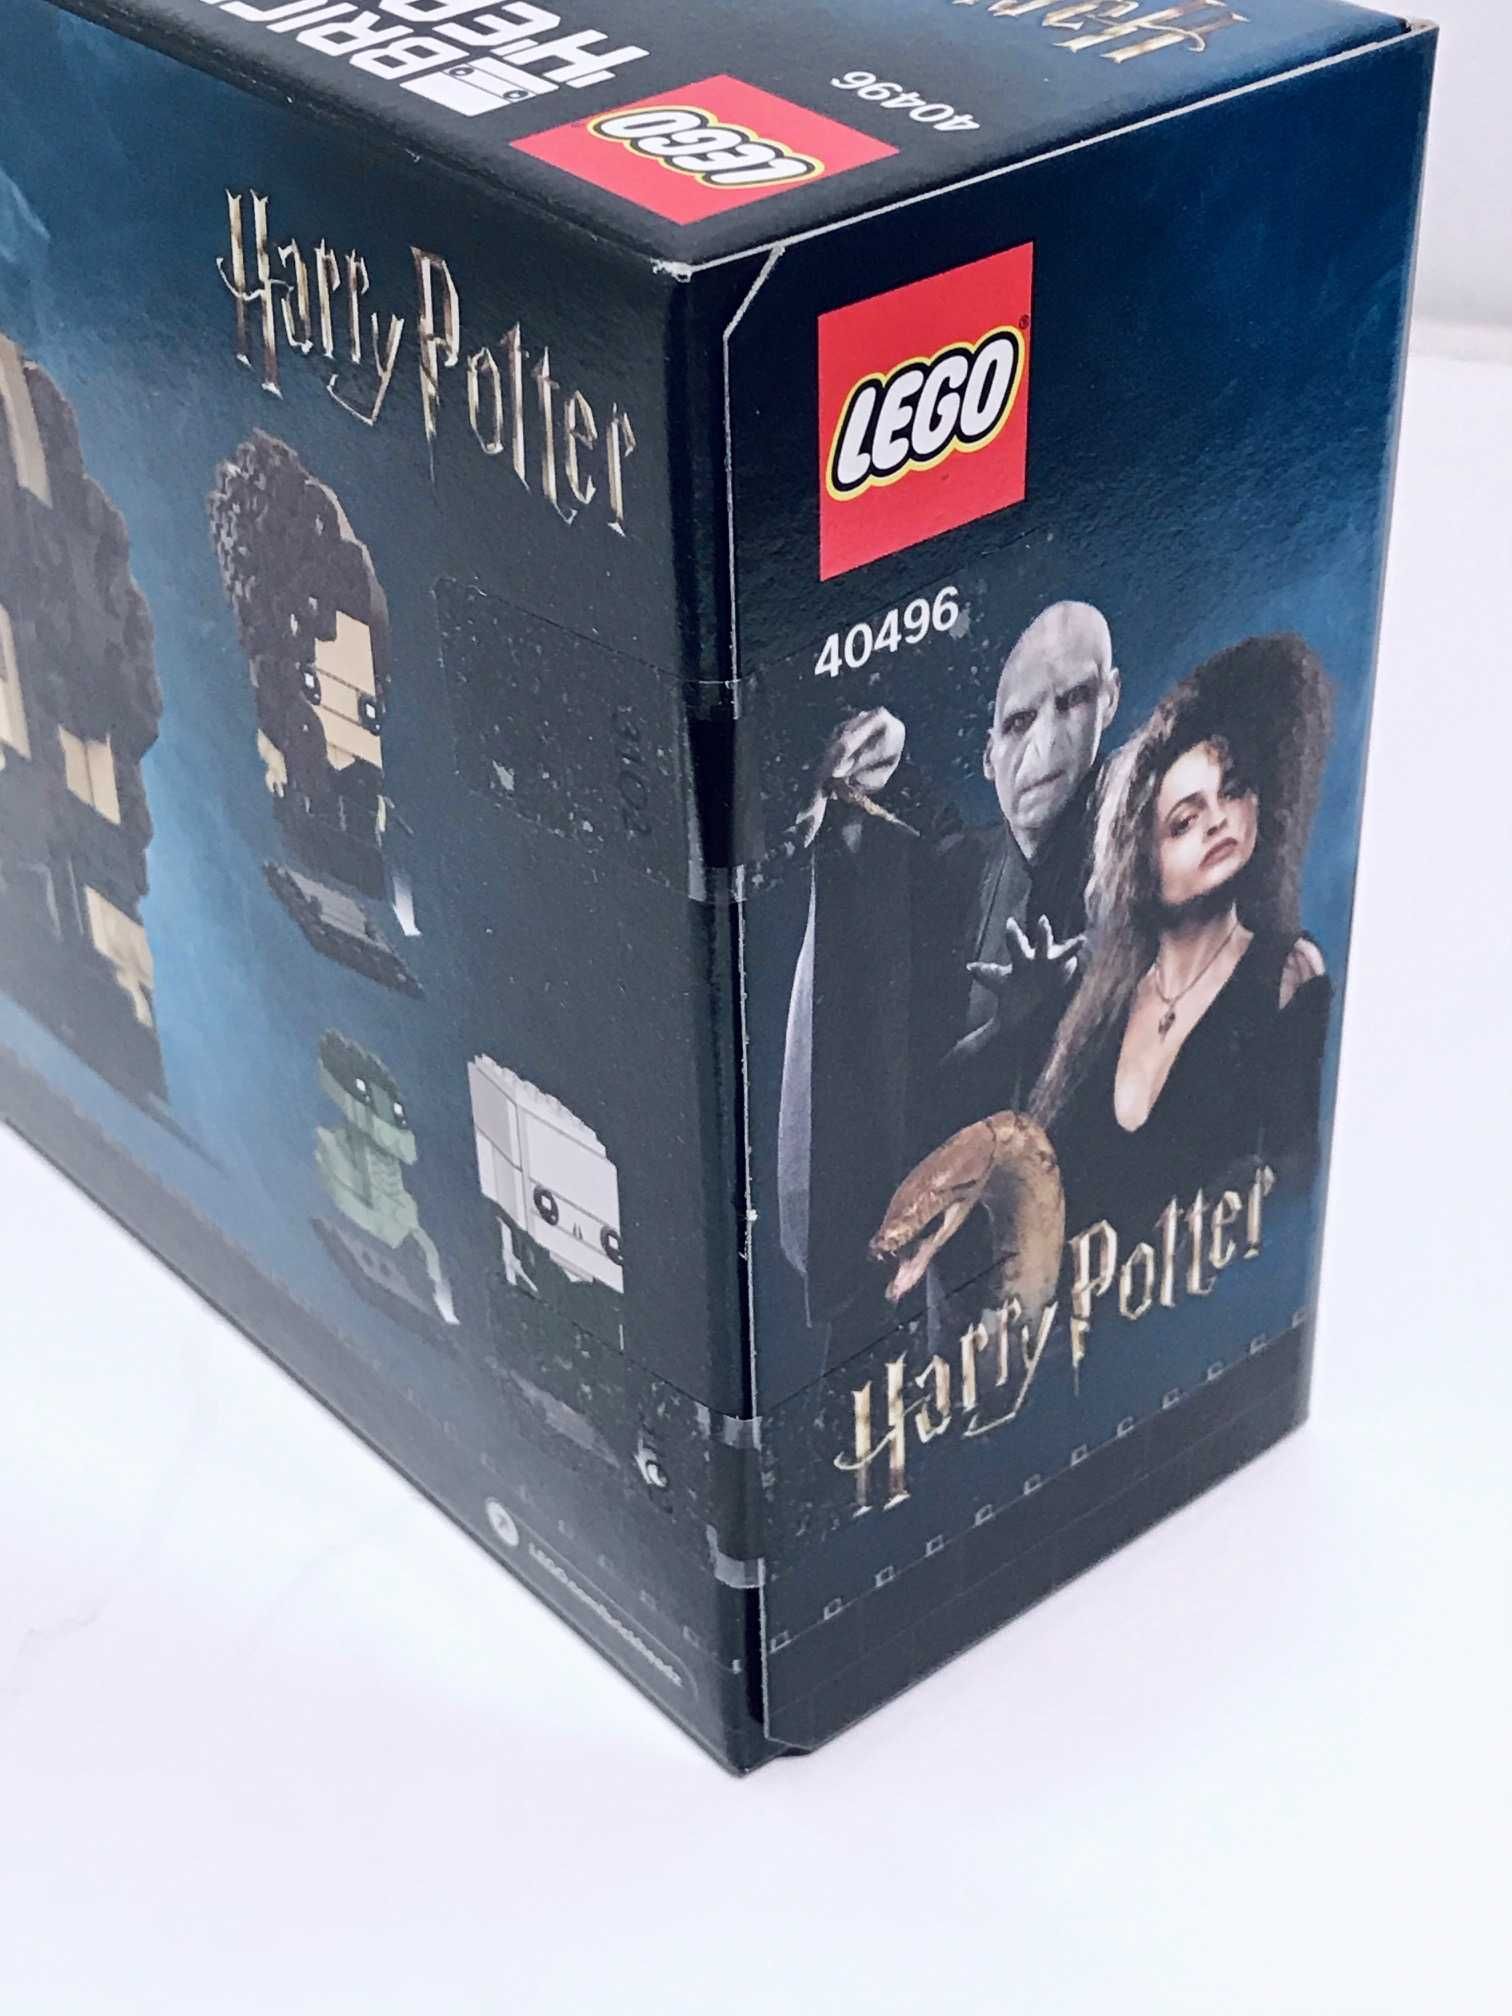 LEGO 40496 BrickHeadz - Voldemort, Nagini i Bellatrix Wysyłka 24h.